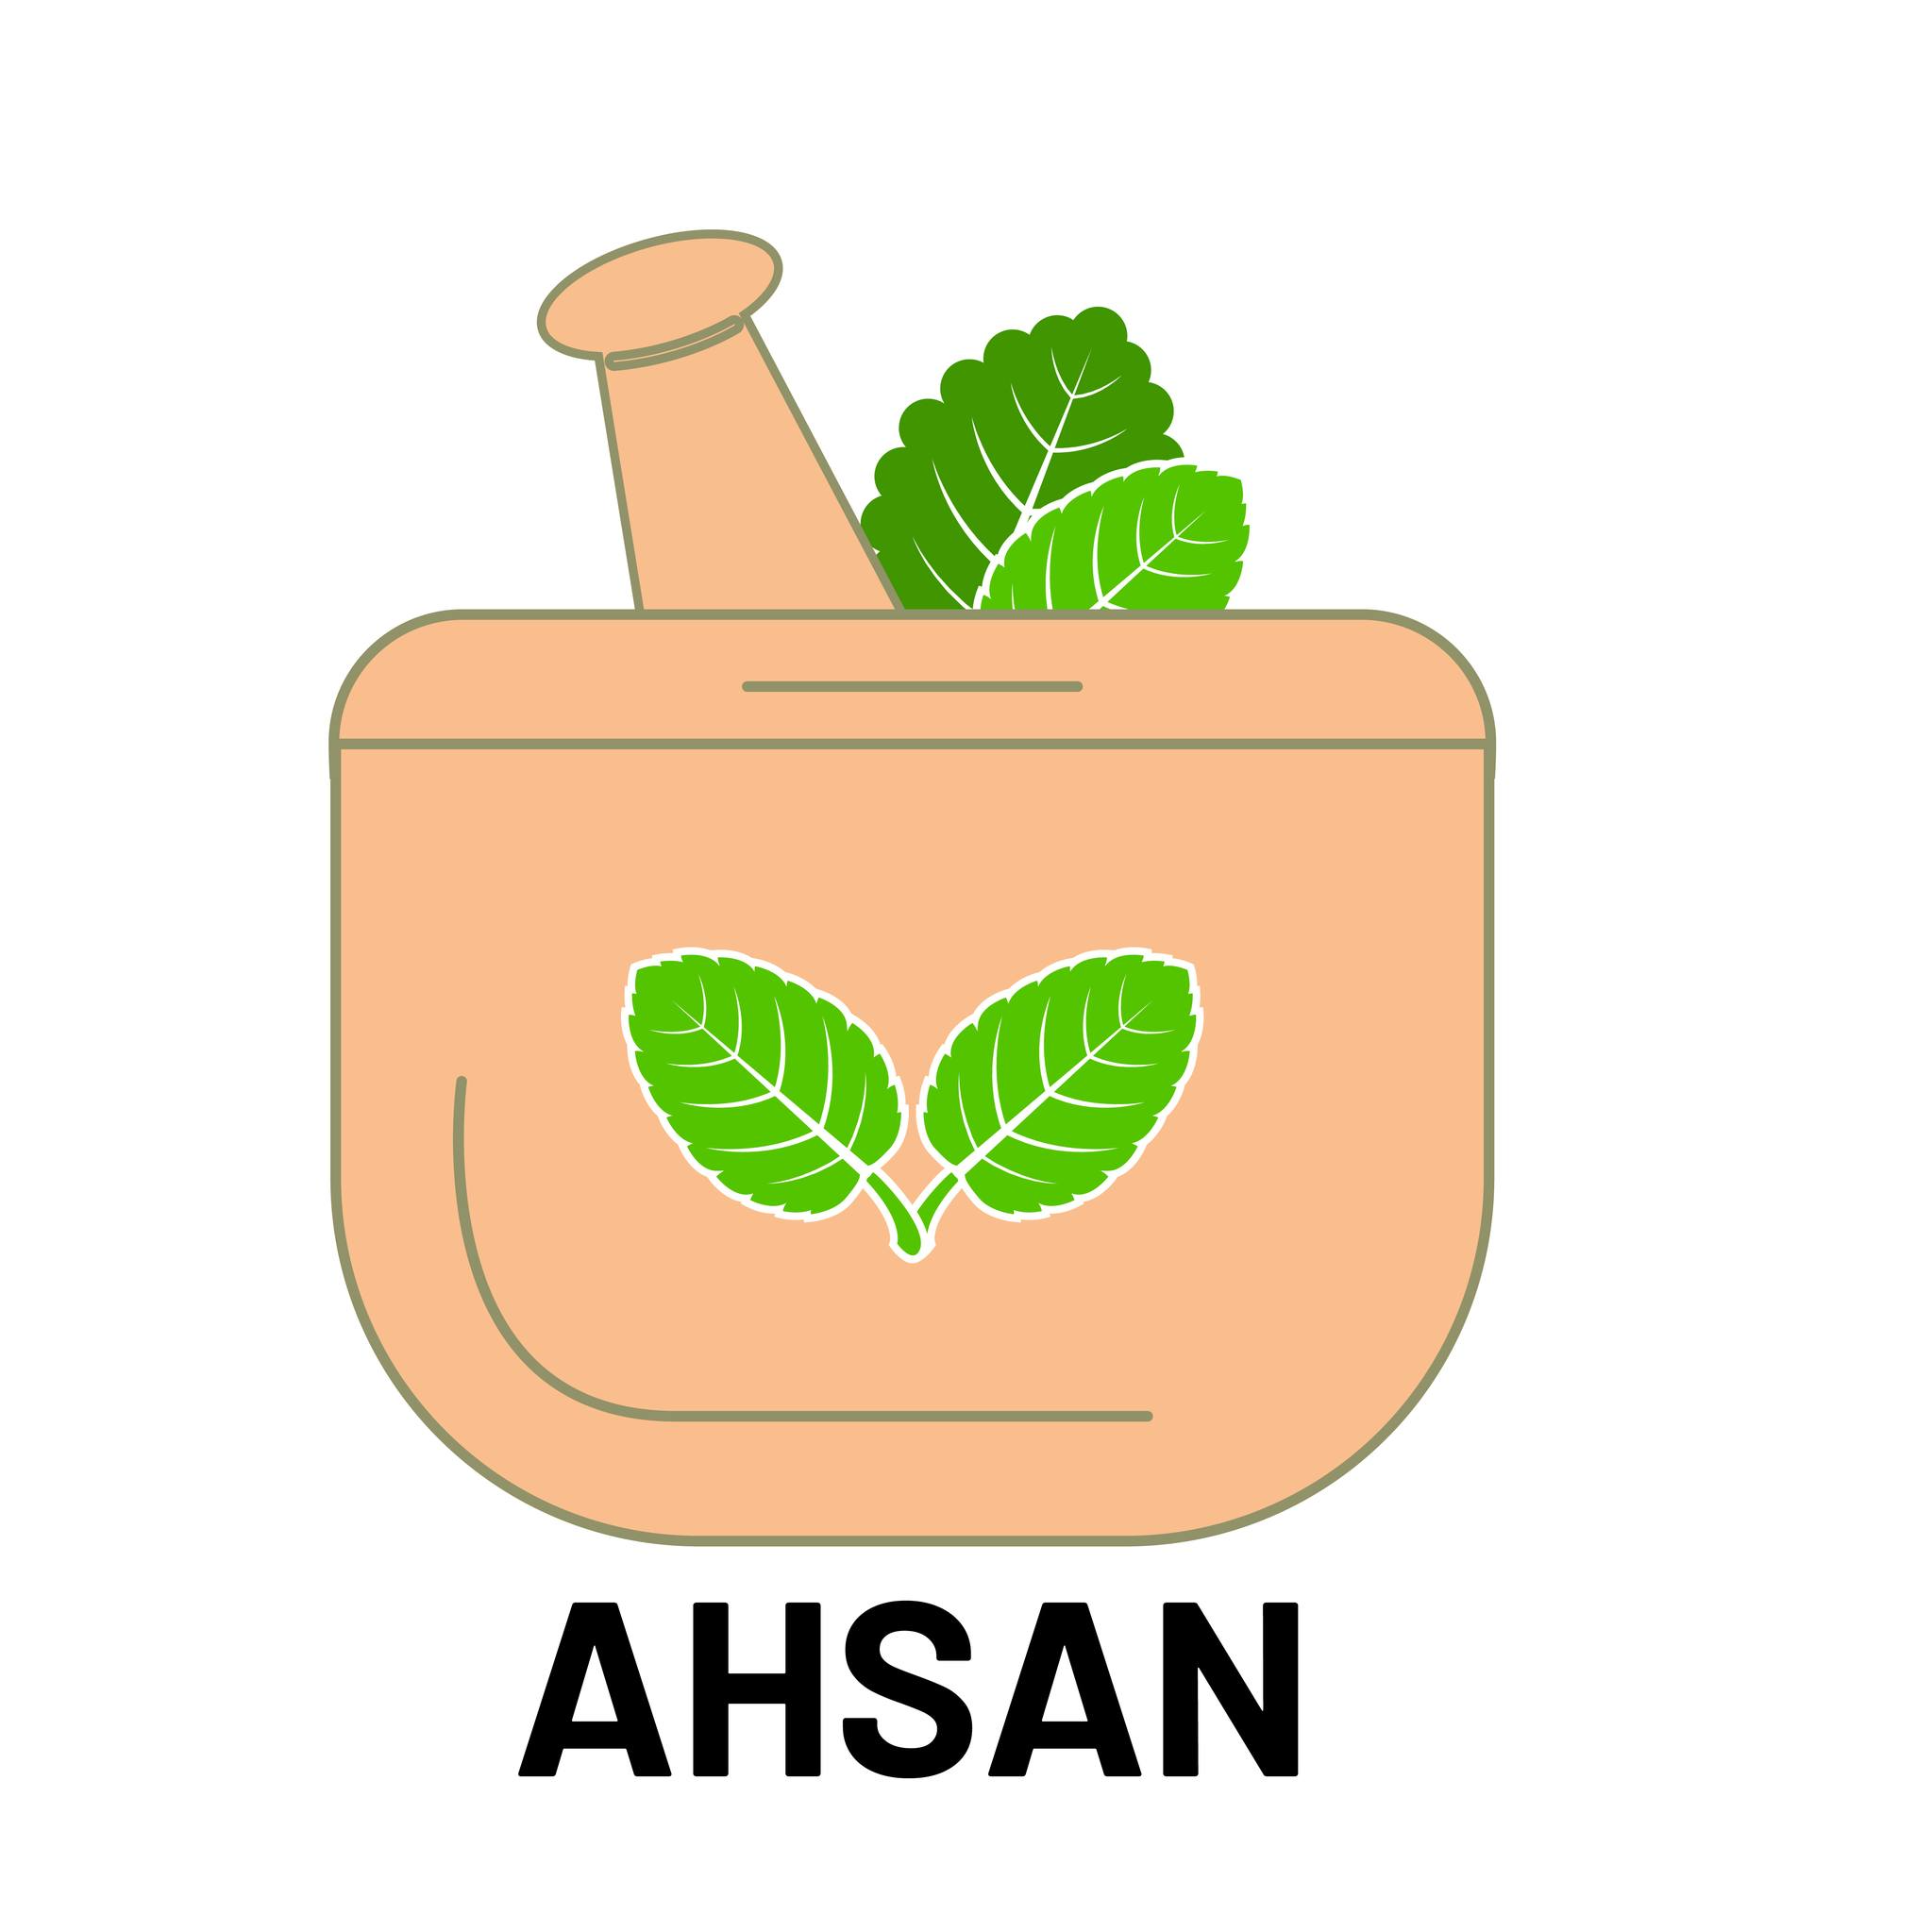 Ahsan Hemayet Greek Medicine Productive Ltd